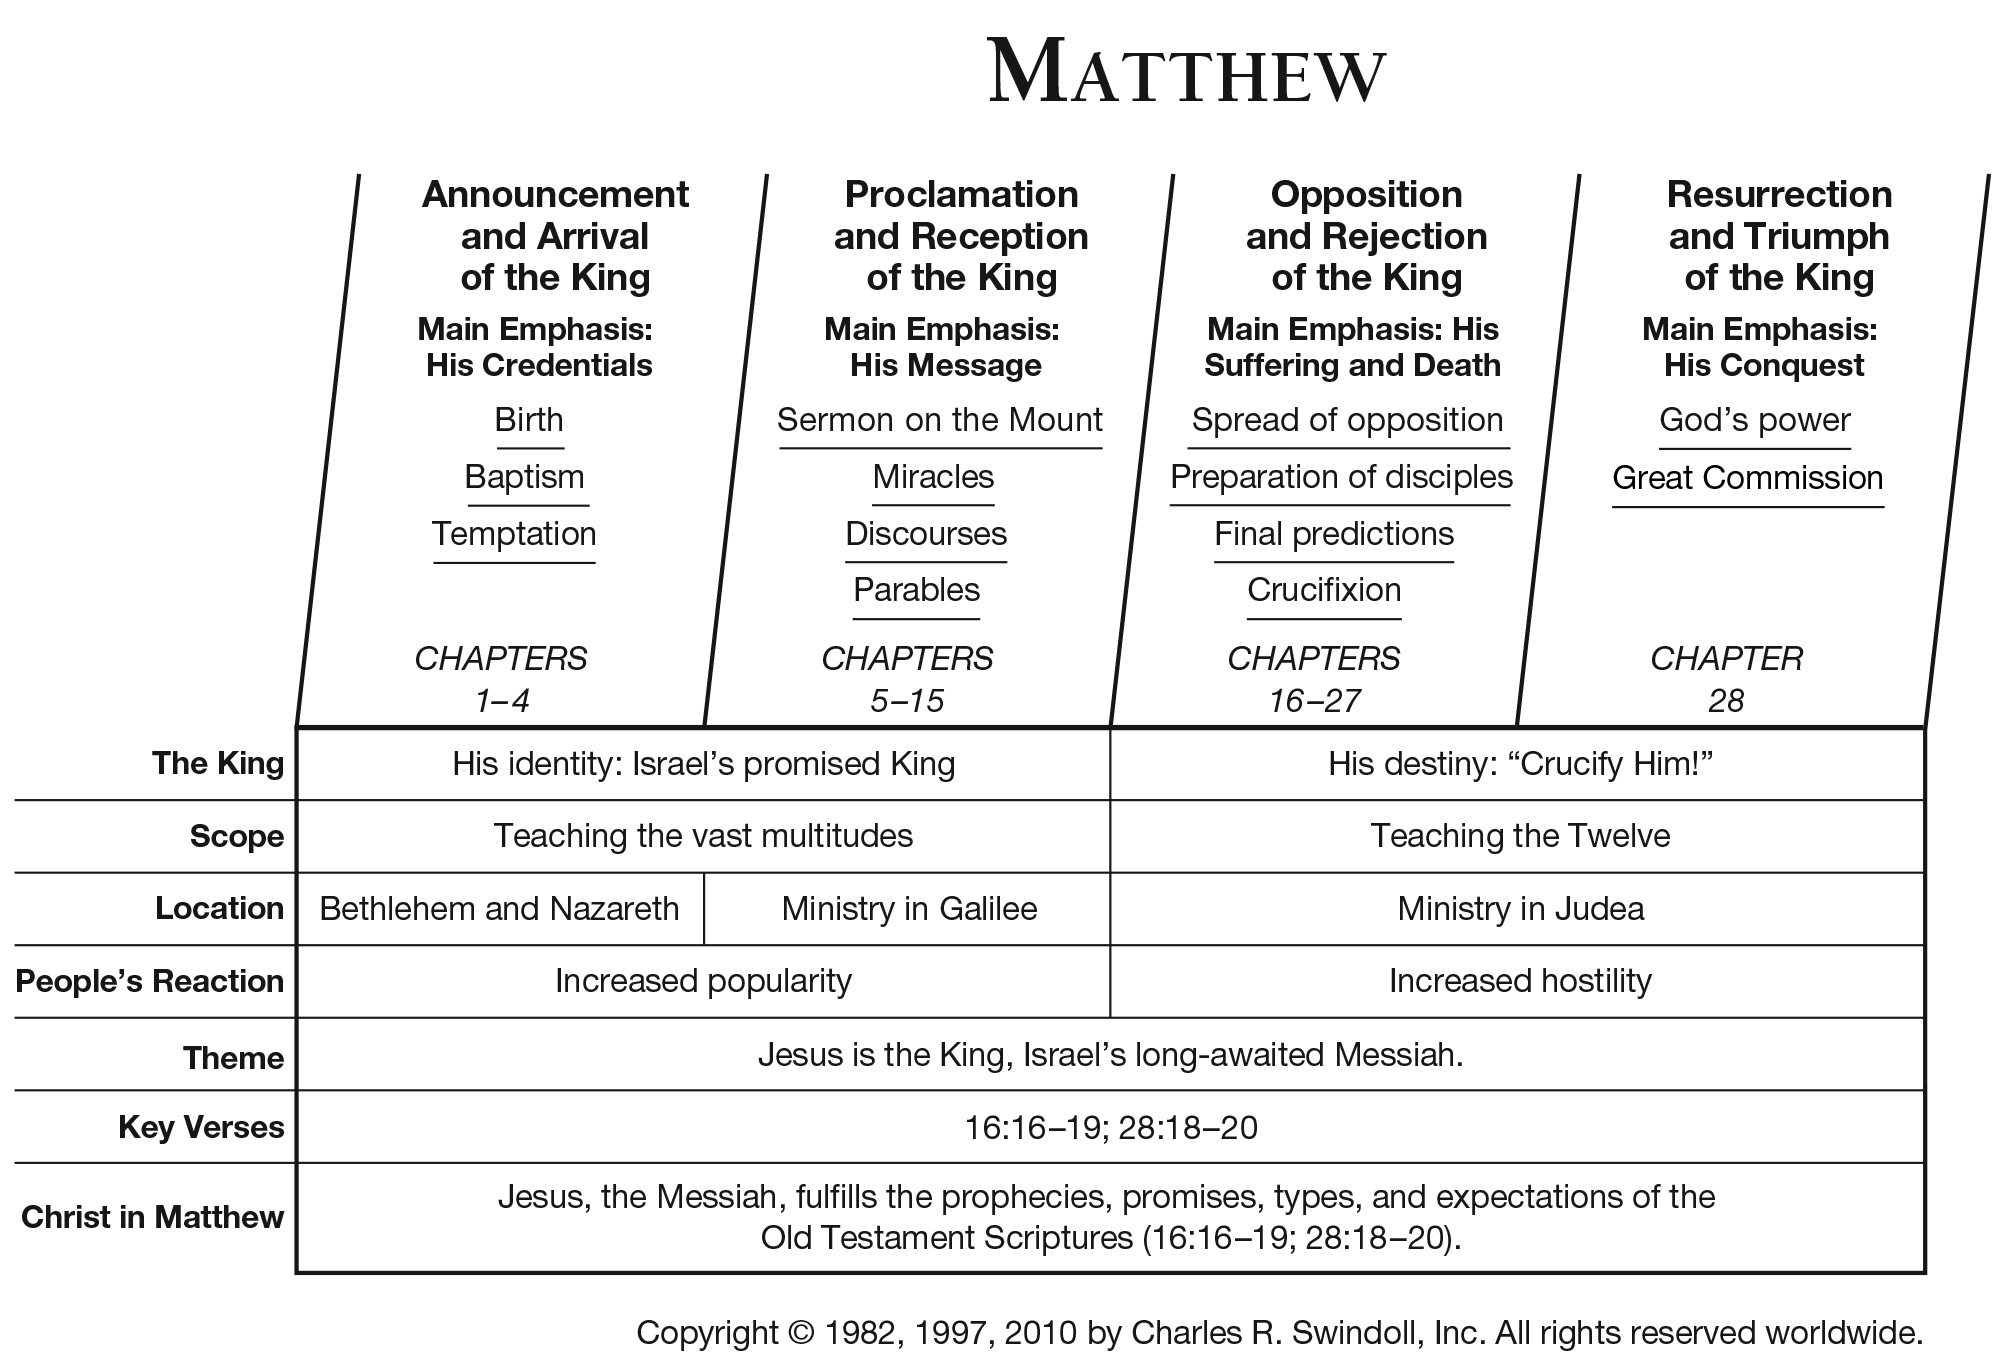 Matthew 5:1-2 Commentary